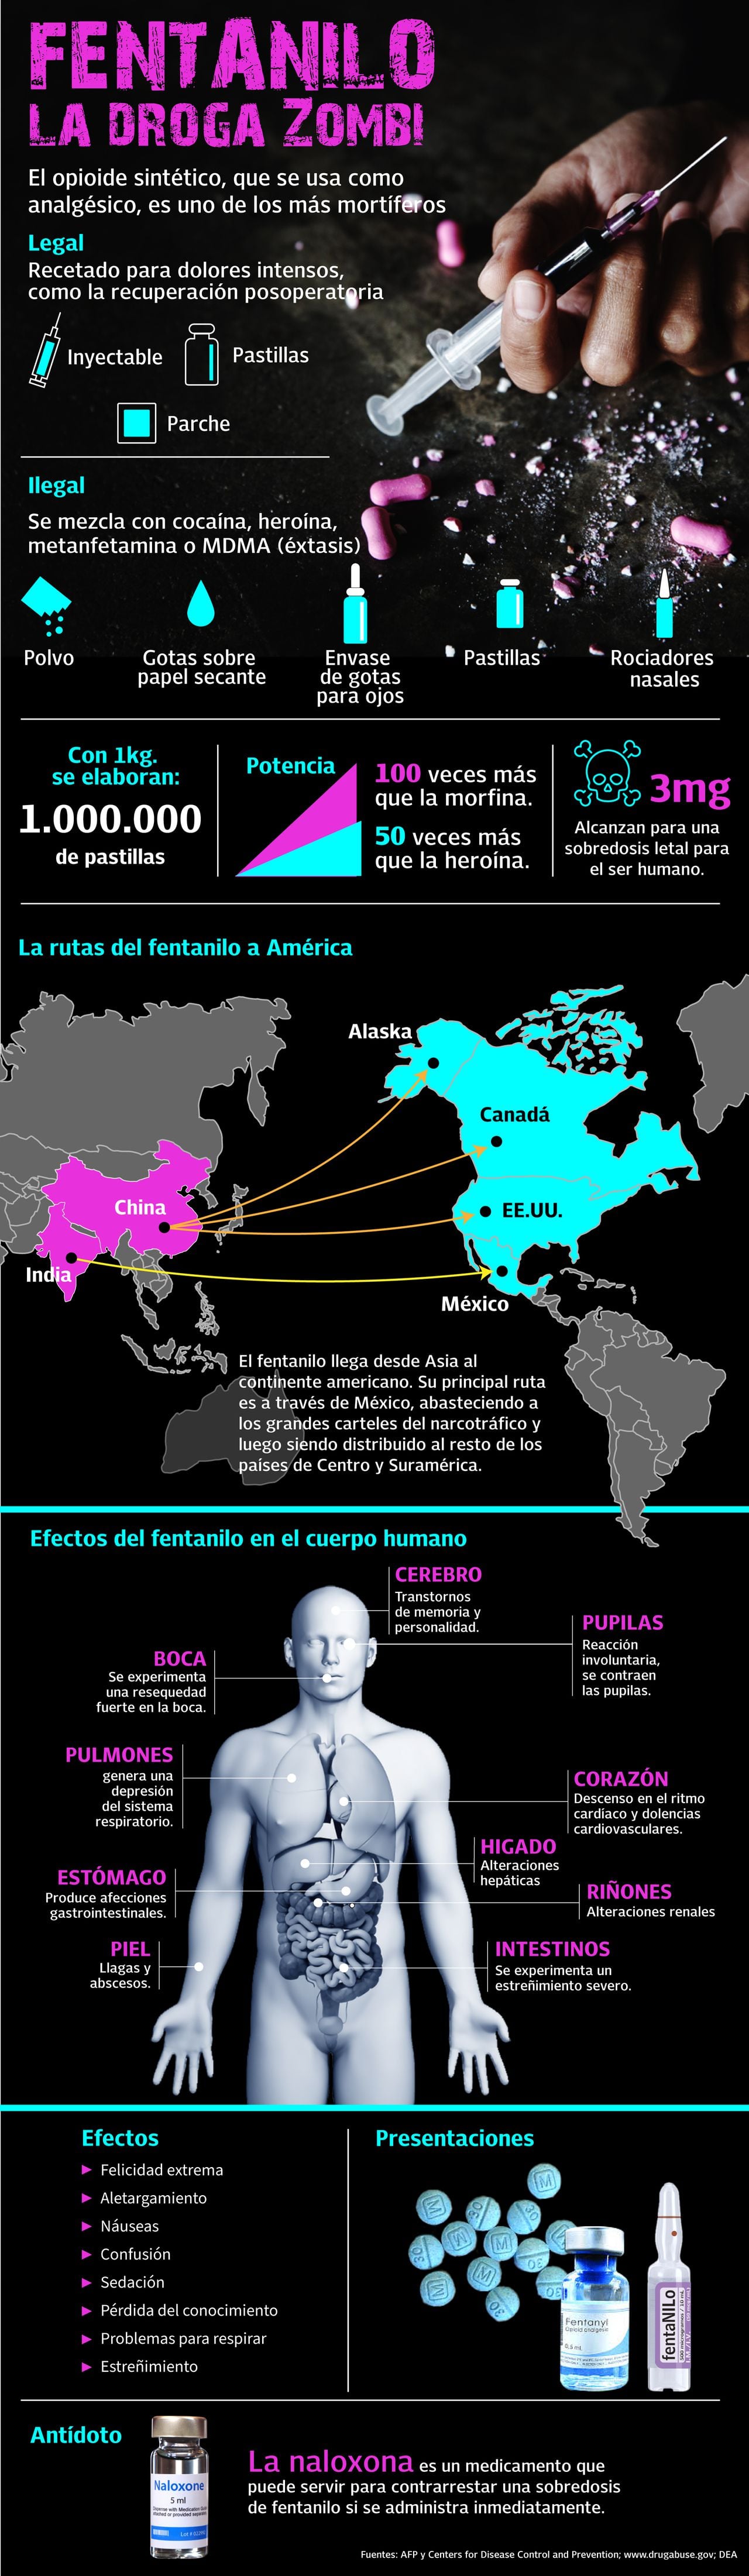 Fentanilo, la peligrosa droga ‘Zombie’ que afecta a Estados Unidos, ya llegó a Colombia; infografía por Edward Certuche.